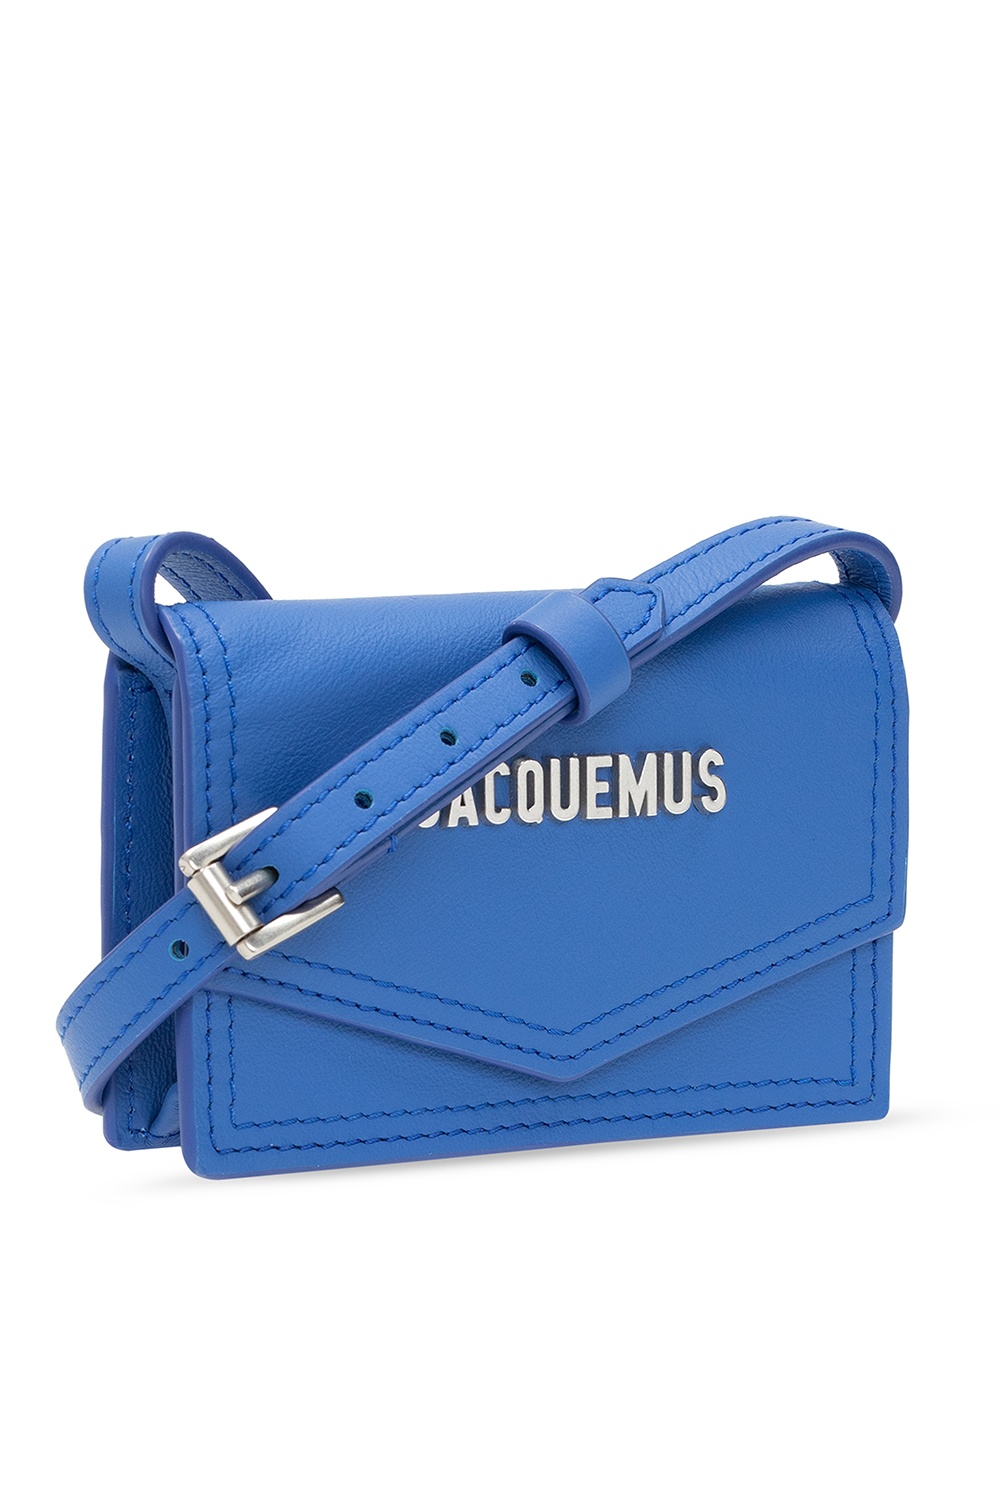 Jacquemus 'le Porte Azur' Strapped Pouch in Blue